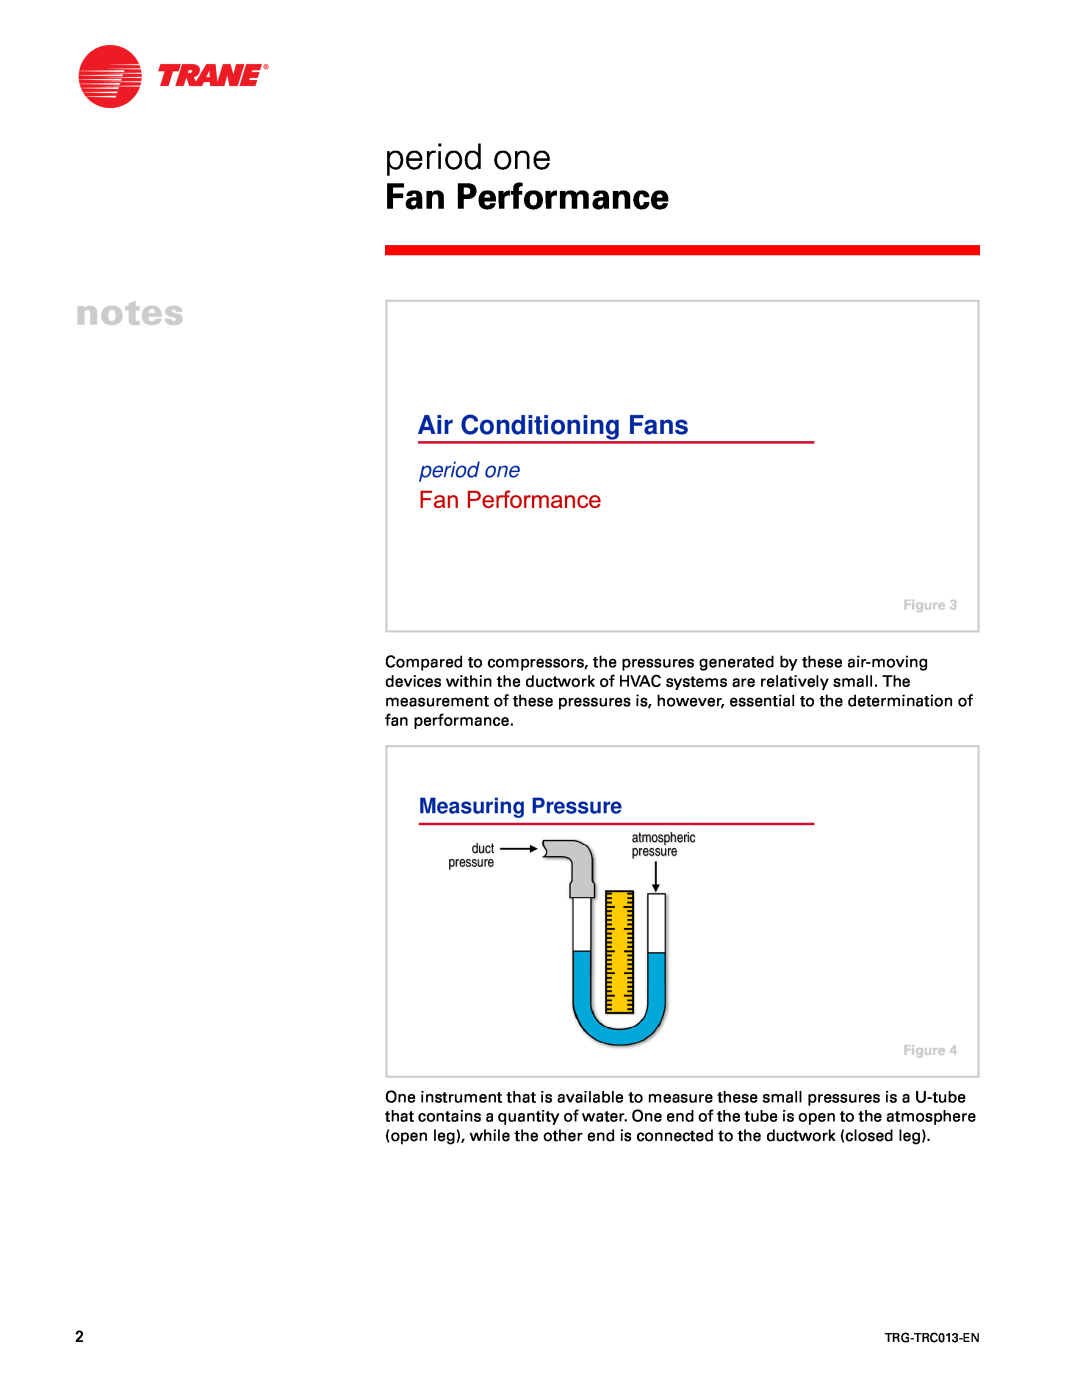 Trane TRG-TRC013-EN manual period one, Measuring Pressure, Air Conditioning Fans, atmospheric ductpressure pressure 